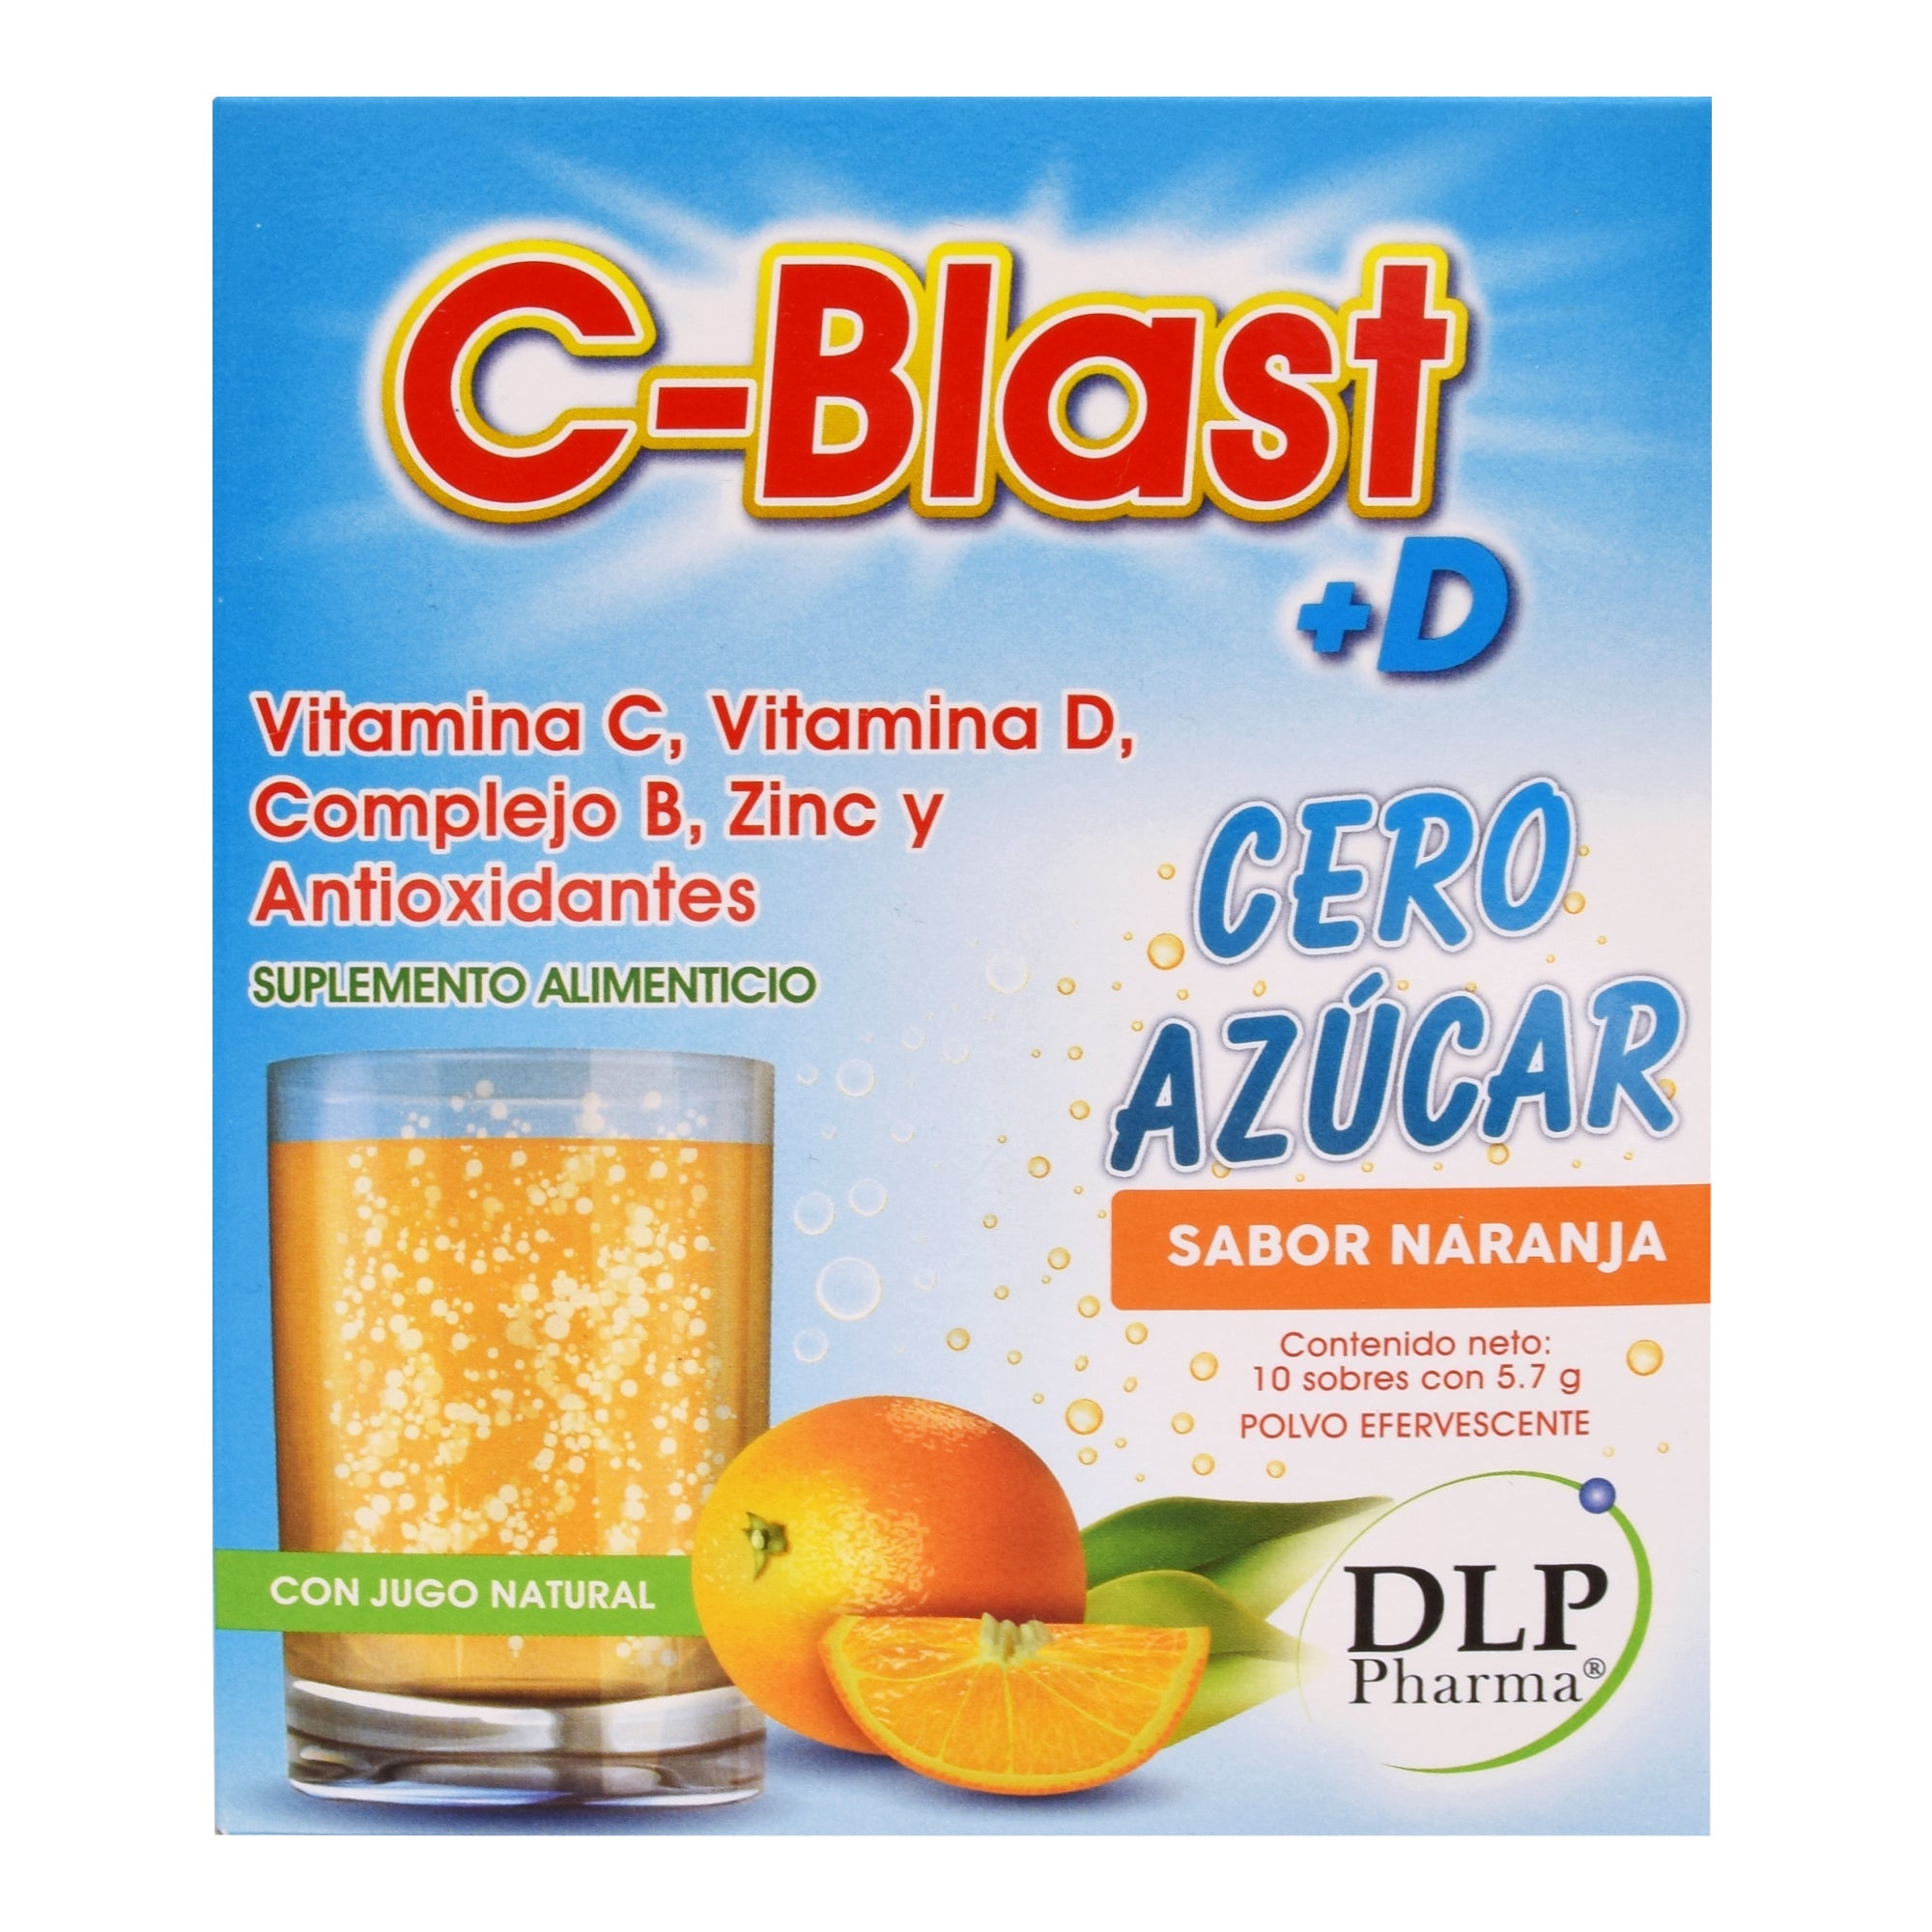 C Blast Cero Azucar Naranja 10 Sob